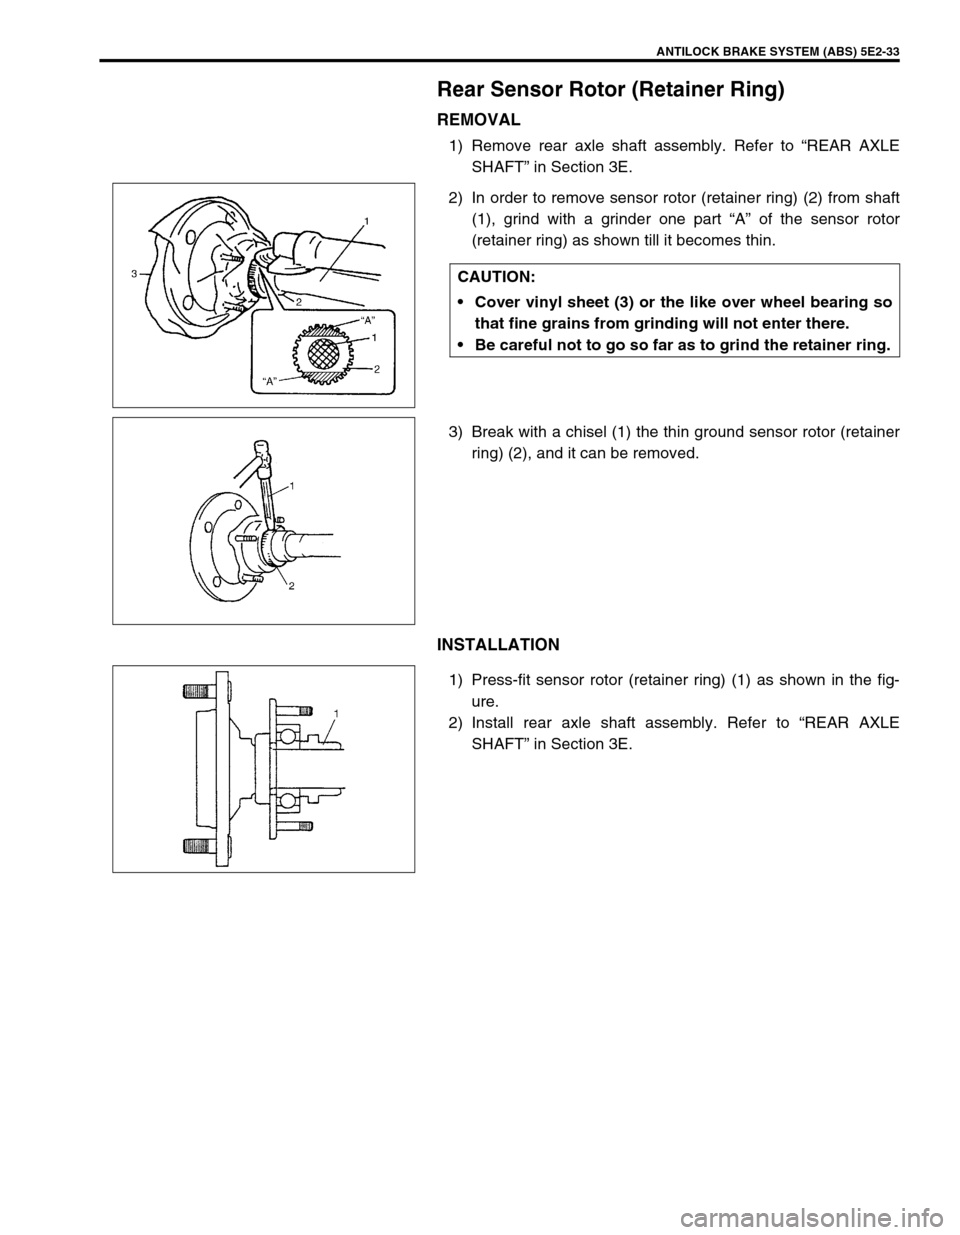 SUZUKI GRAND VITARA 2001 2.G Owners Manual ANTILOCK BRAKE SYSTEM (ABS) 5E2-33
Rear Sensor Rotor (Retainer Ring)
REMOVAL
1) Remove rear axle shaft assembly. Refer to “REAR AXLE
SHAFT” in Section 3E.
2) In order to remove sensor rotor (retai